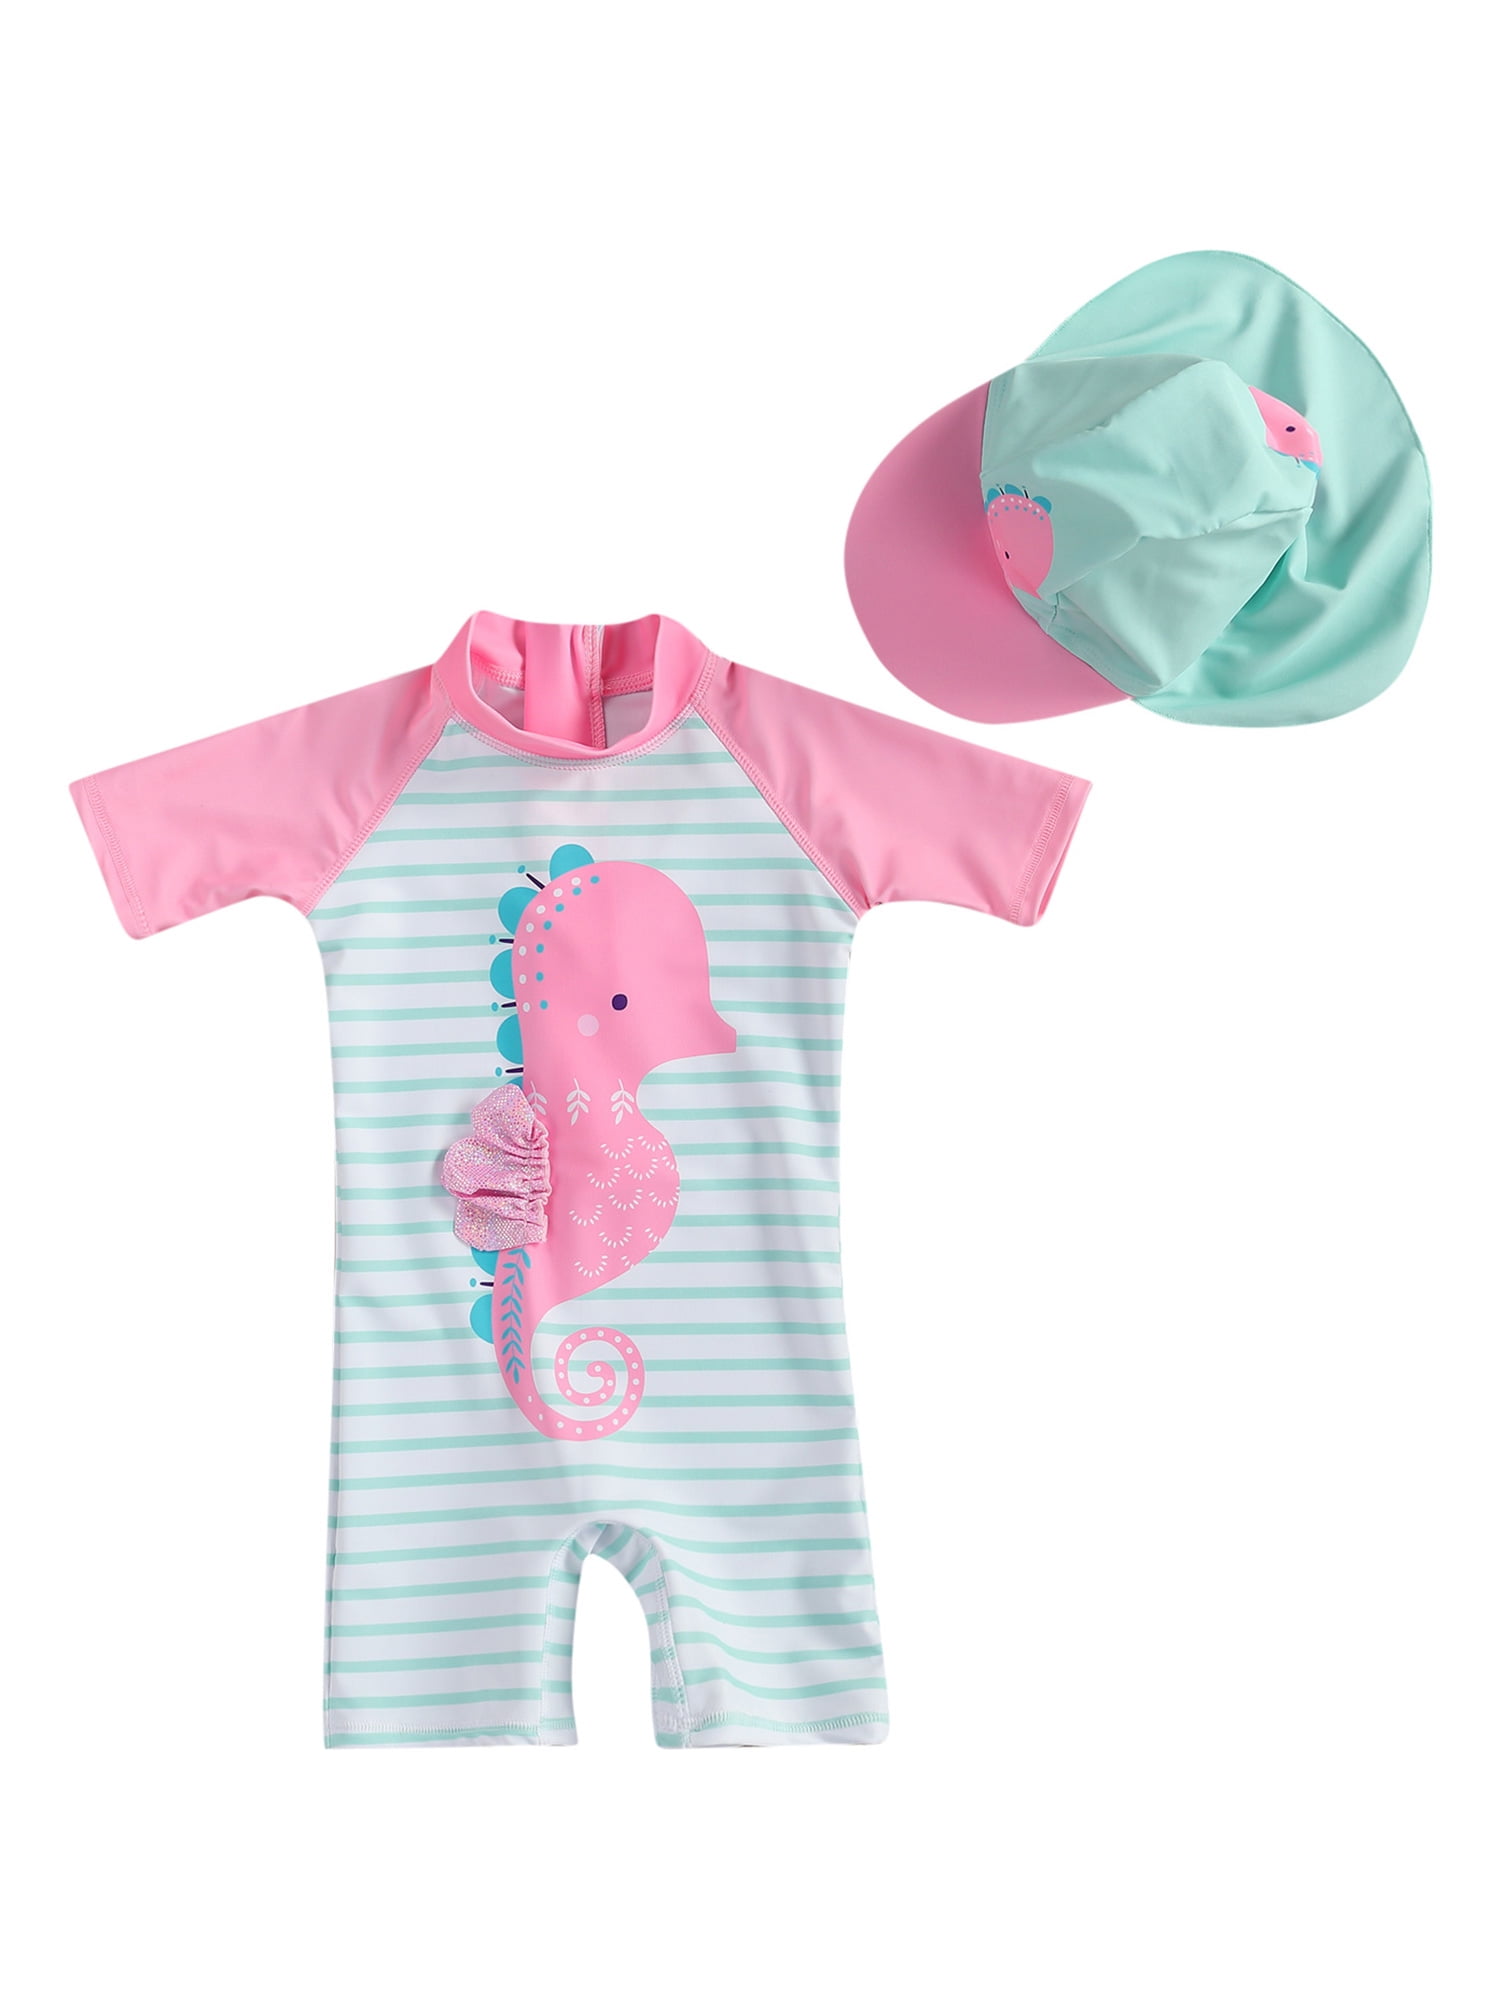 Toddler Baby Boy Girl Swimsuit Infant One-Piece Zip Rashguard Swimsuit UPF 50 Sun Protection Free Sun Hat